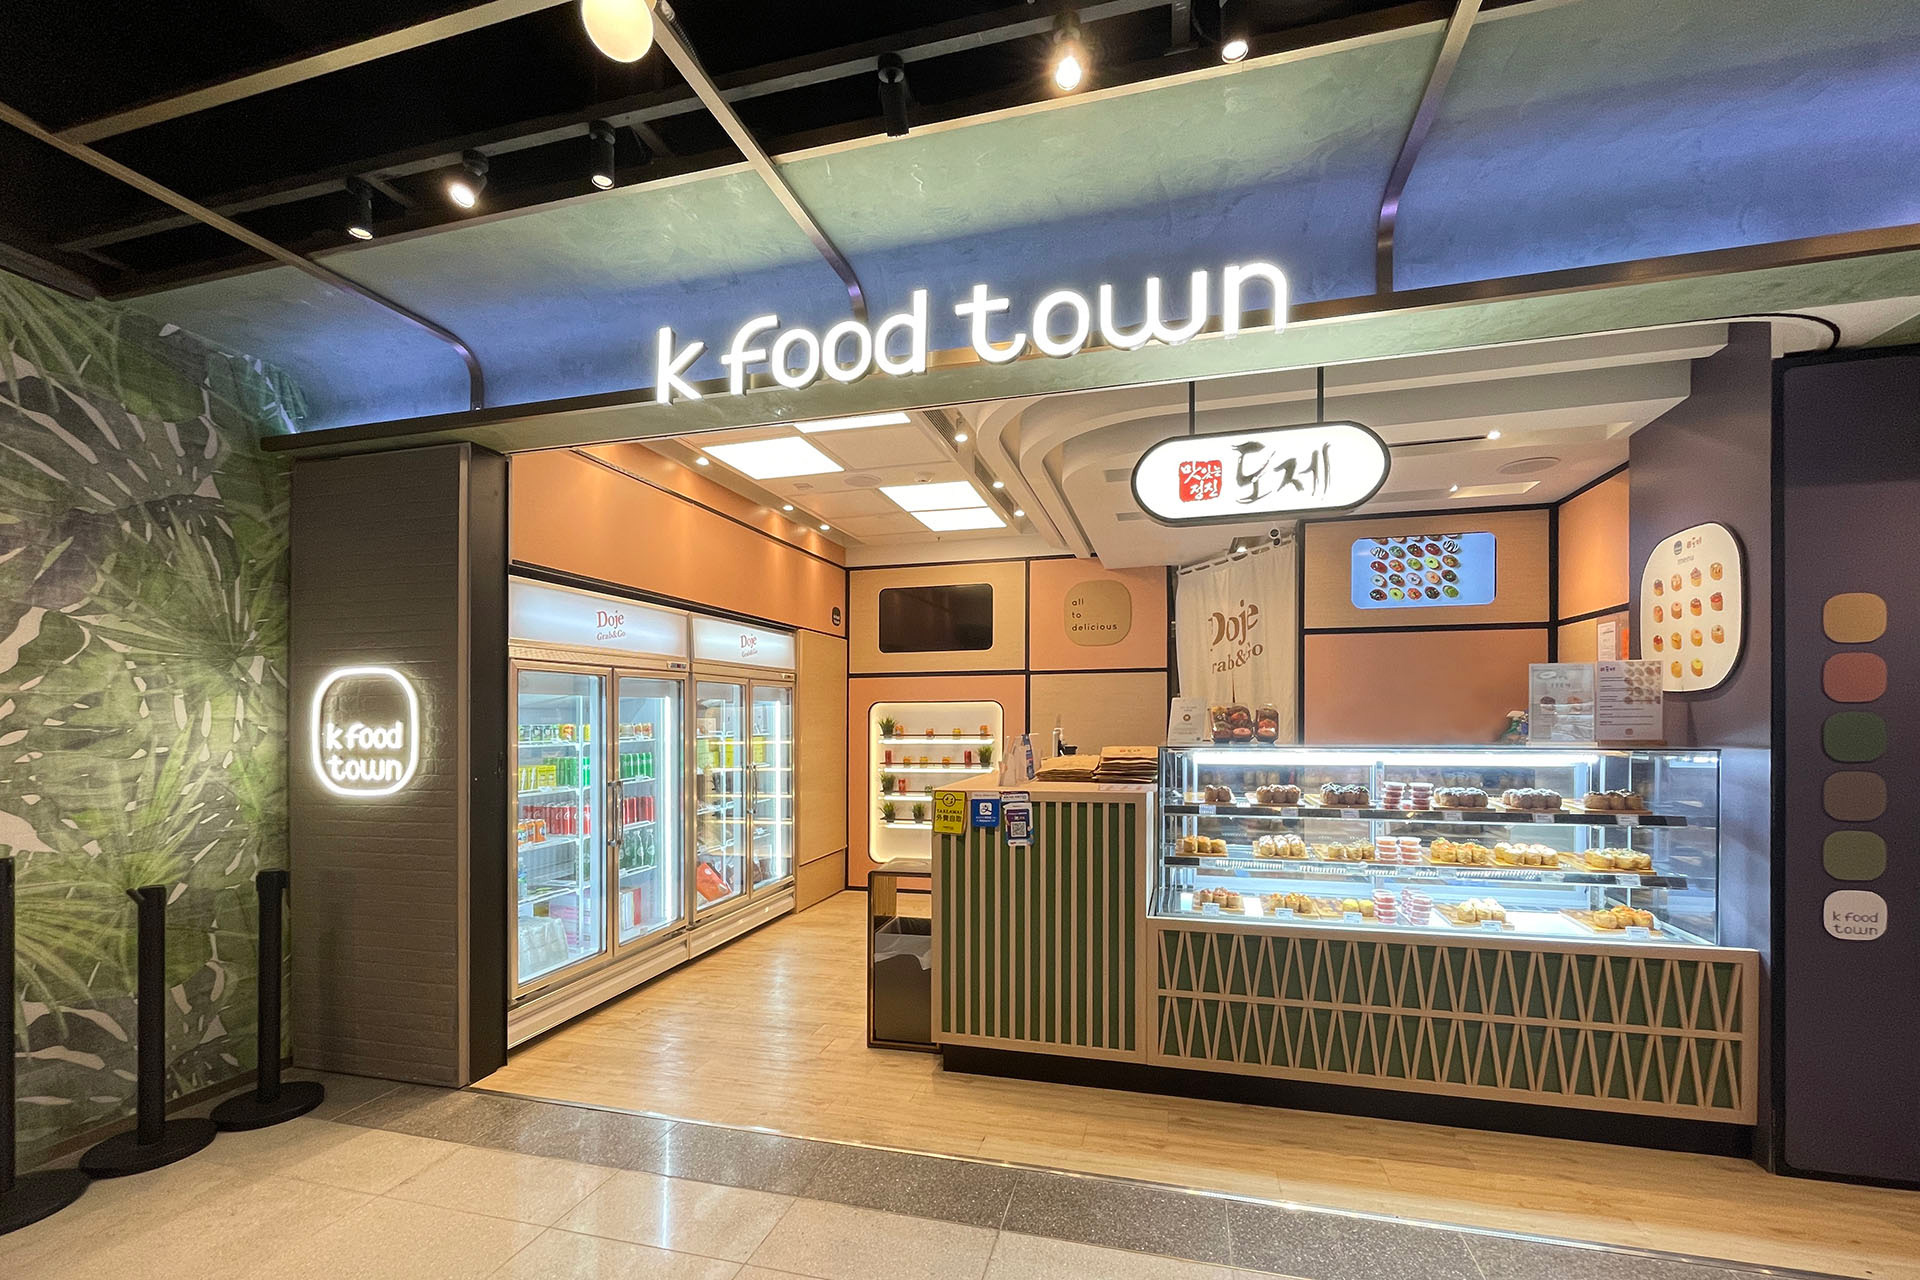 K-Food Town K11 Musea Hong Kong Store Interior, Branding, Logo and Artwork Design by Plaap Design